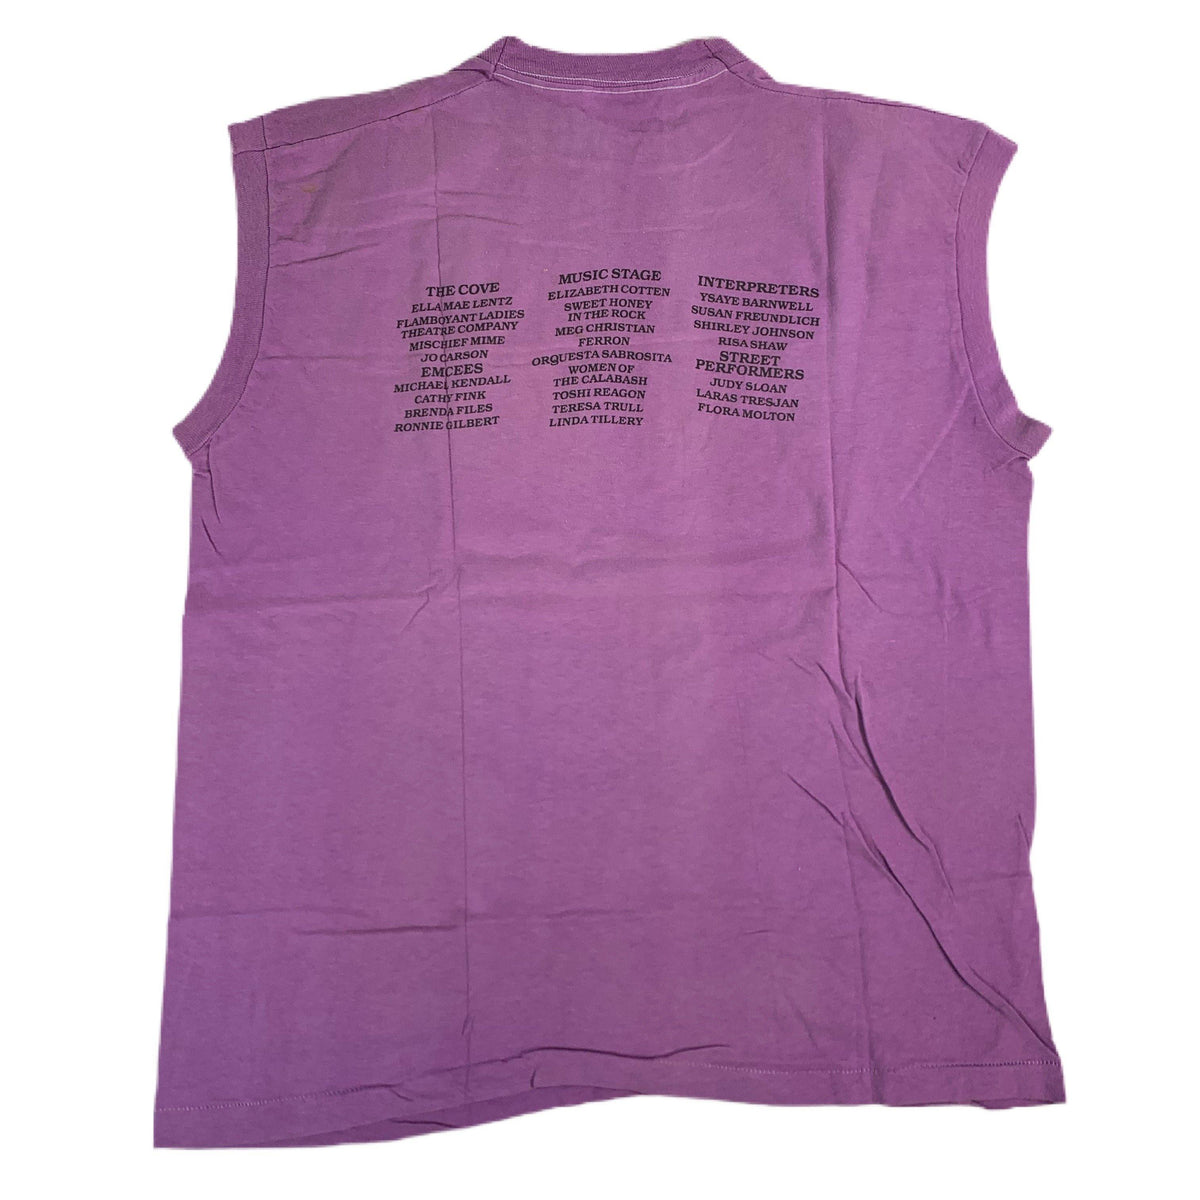 Vintage Roadwork &quot;Sisterfire&quot; LGBTQ Sleeveless Shirt - jointcustodydc